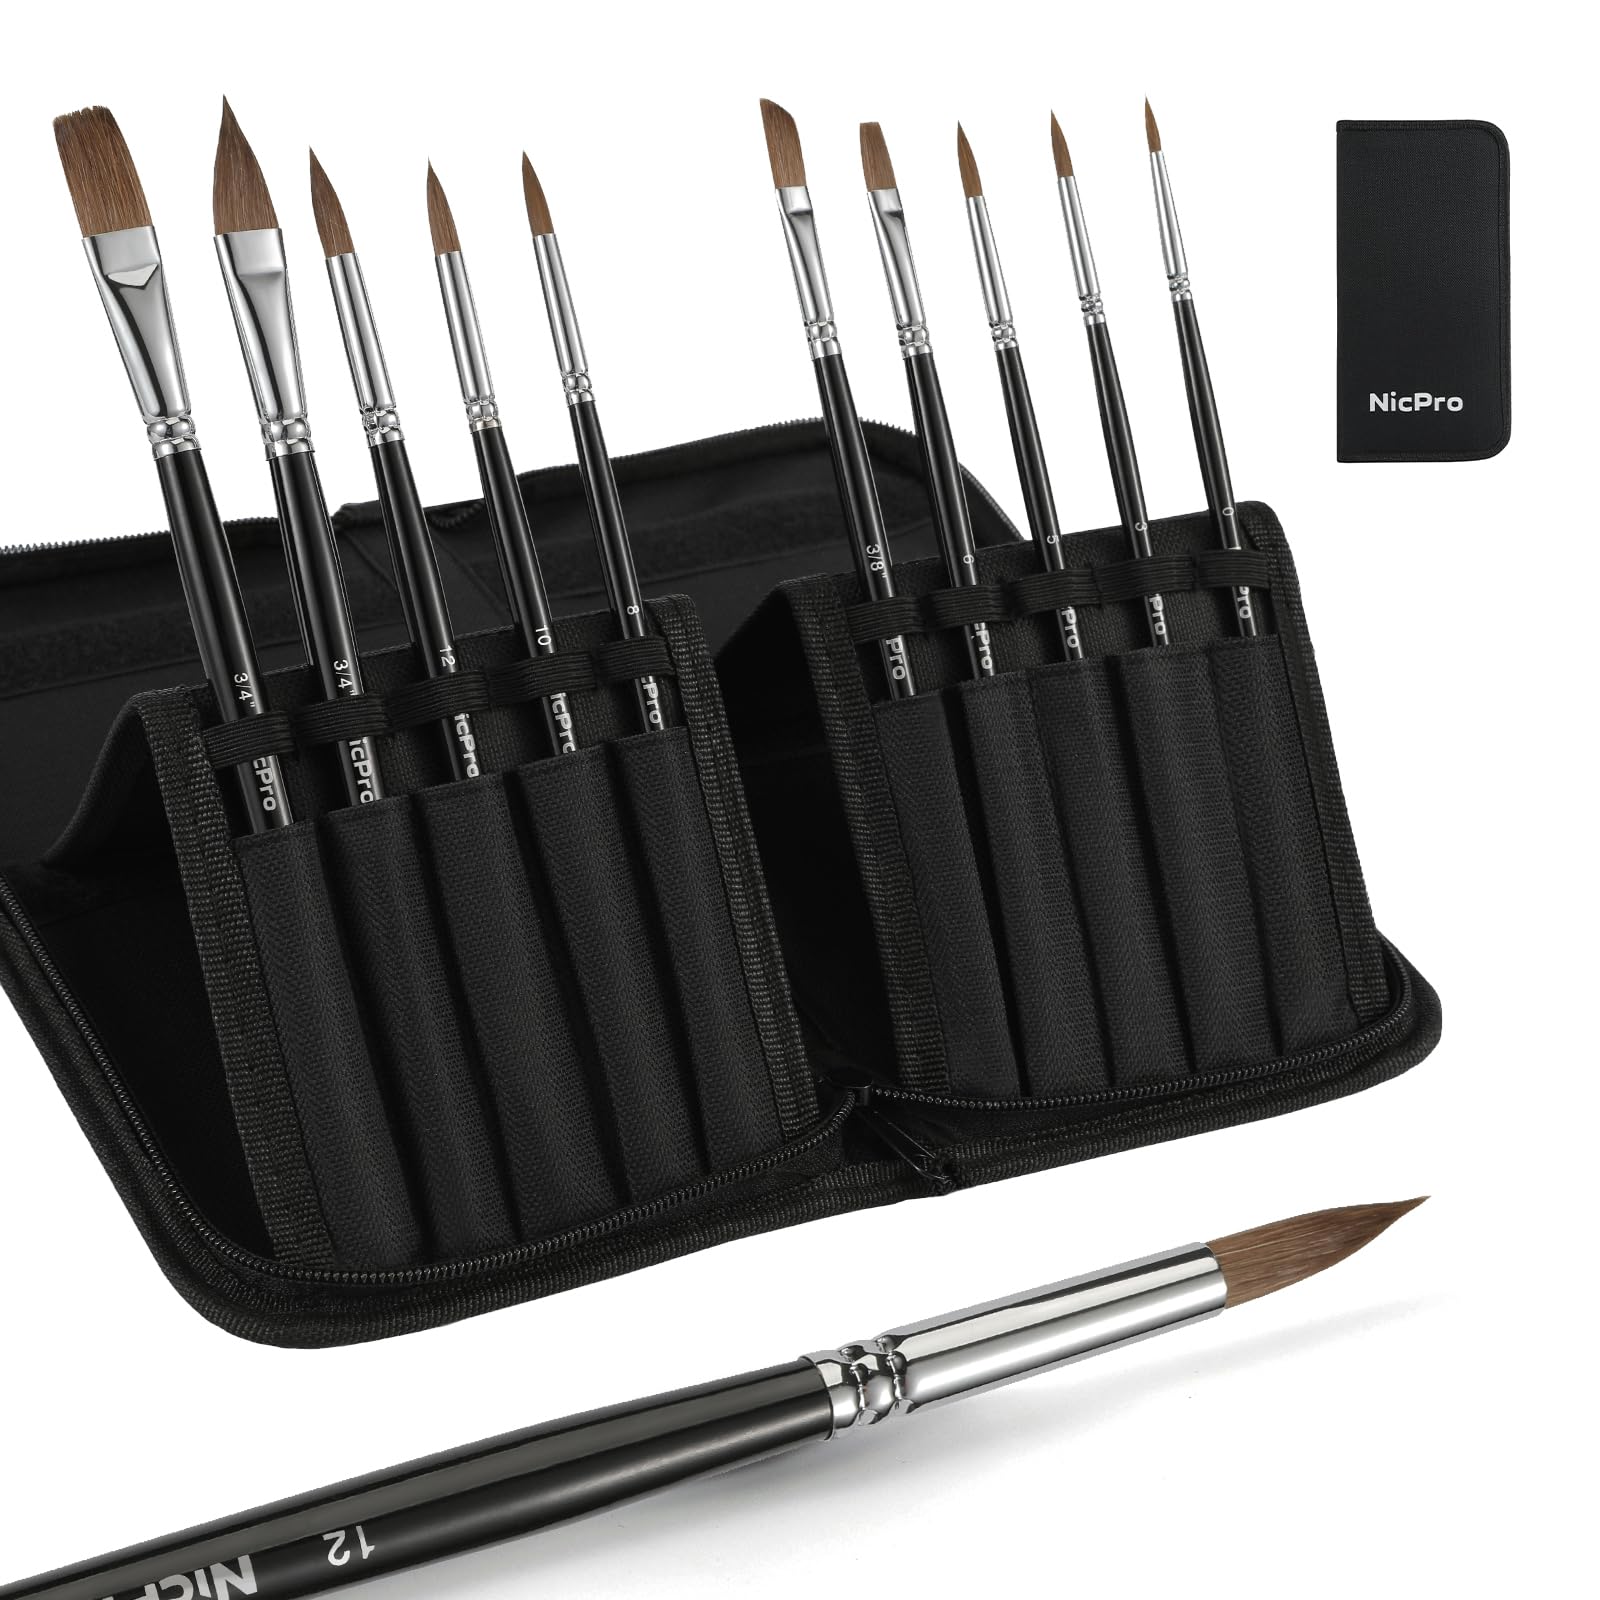 29pcs/set Sketch Pencil Set Professional Sketching Drawing Kit Wood Pencil  Pencil Bags for Painter School Students Art Supplies